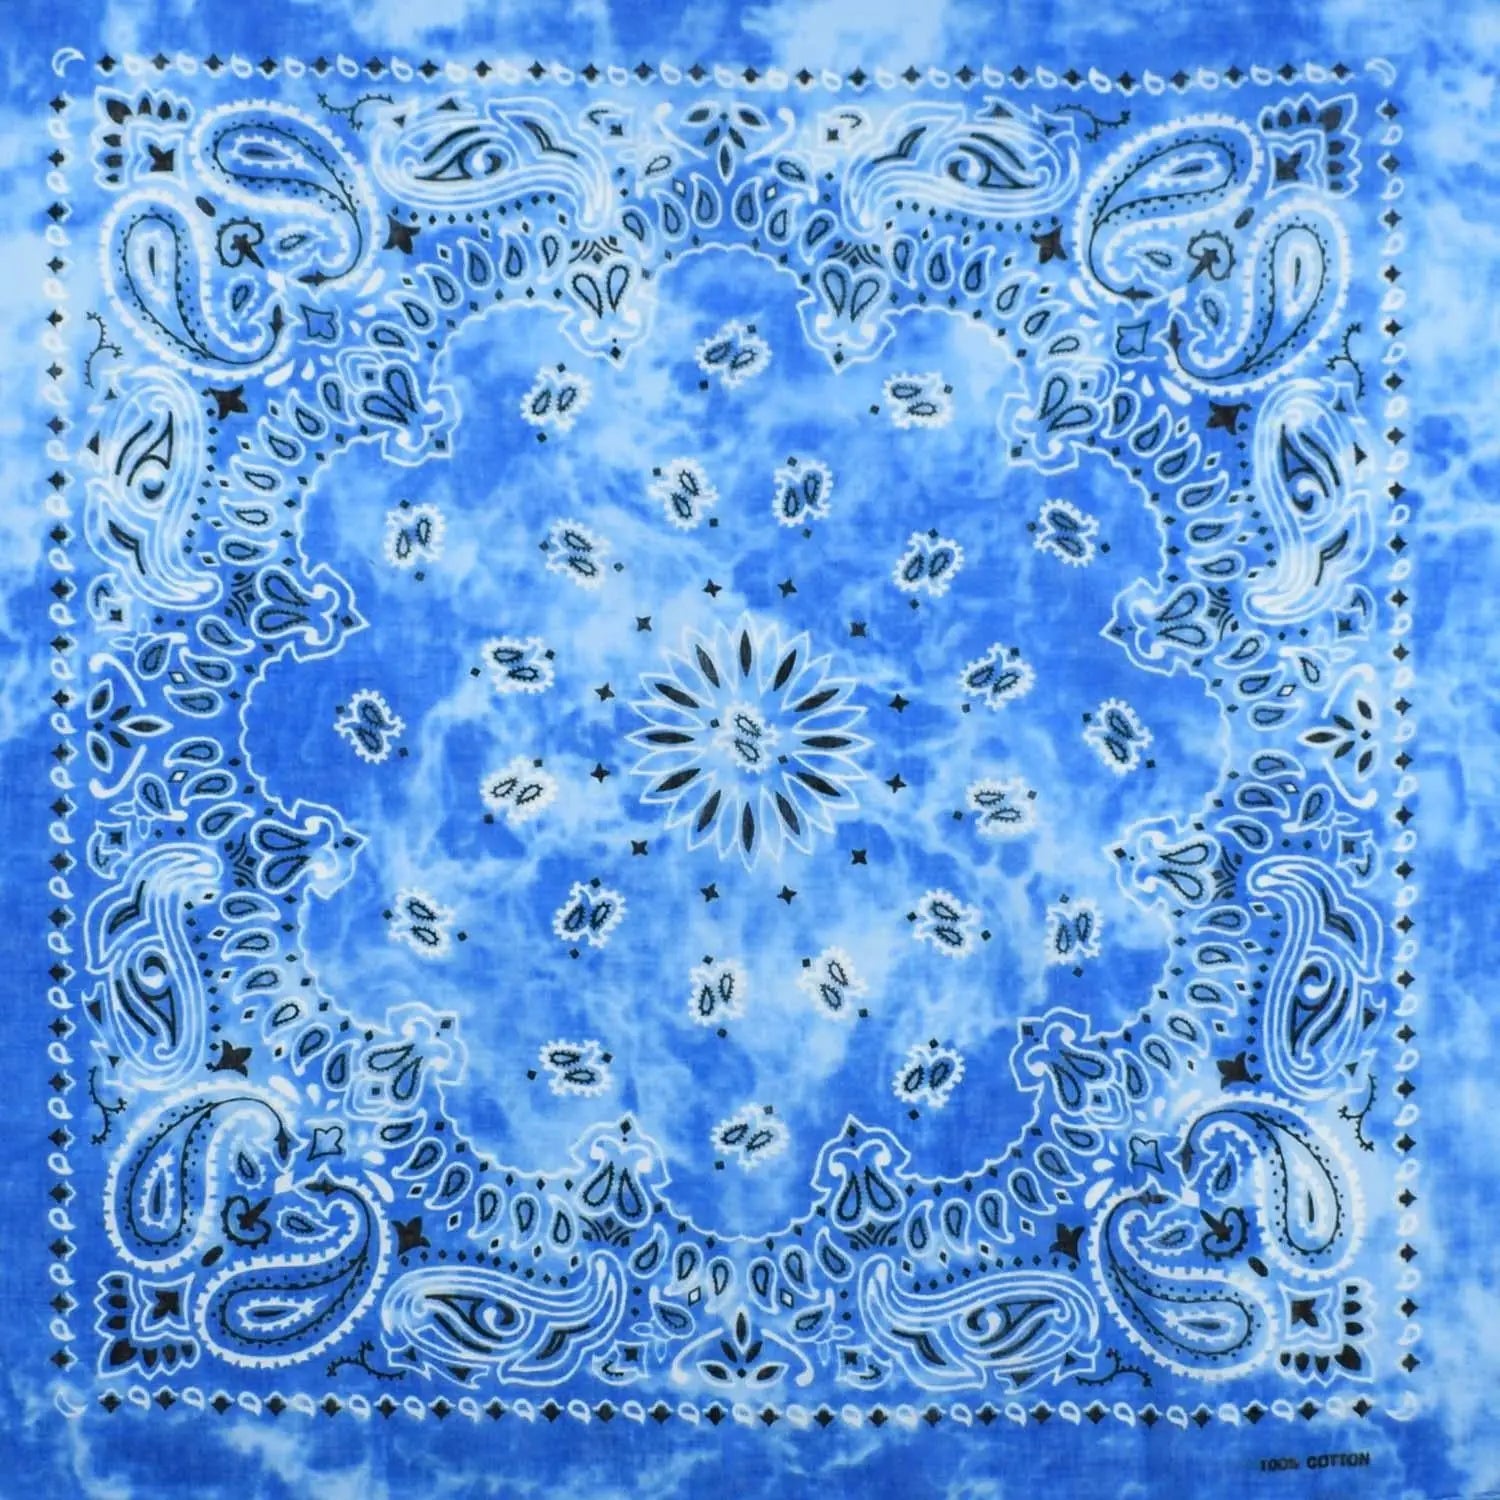 Blue tie dye paisley bandana in 100% cotton fabric